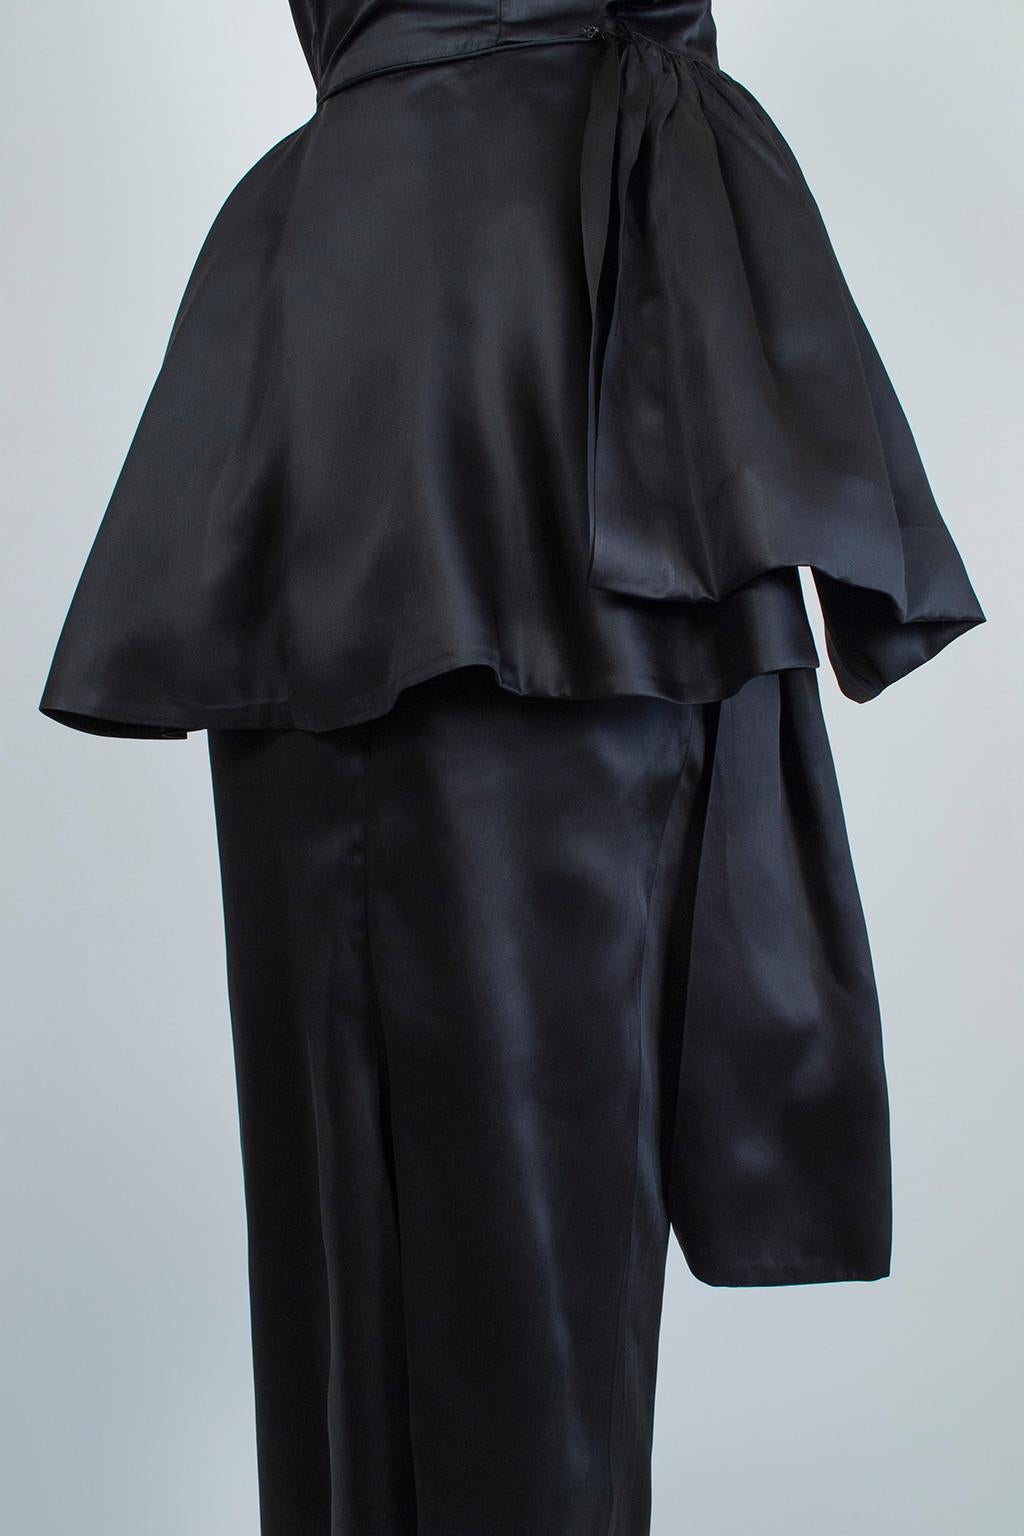 Black Satin Asymmetrical Mermaid Peplum Gown with Detachable Hip Sash- XS, 1950s 4